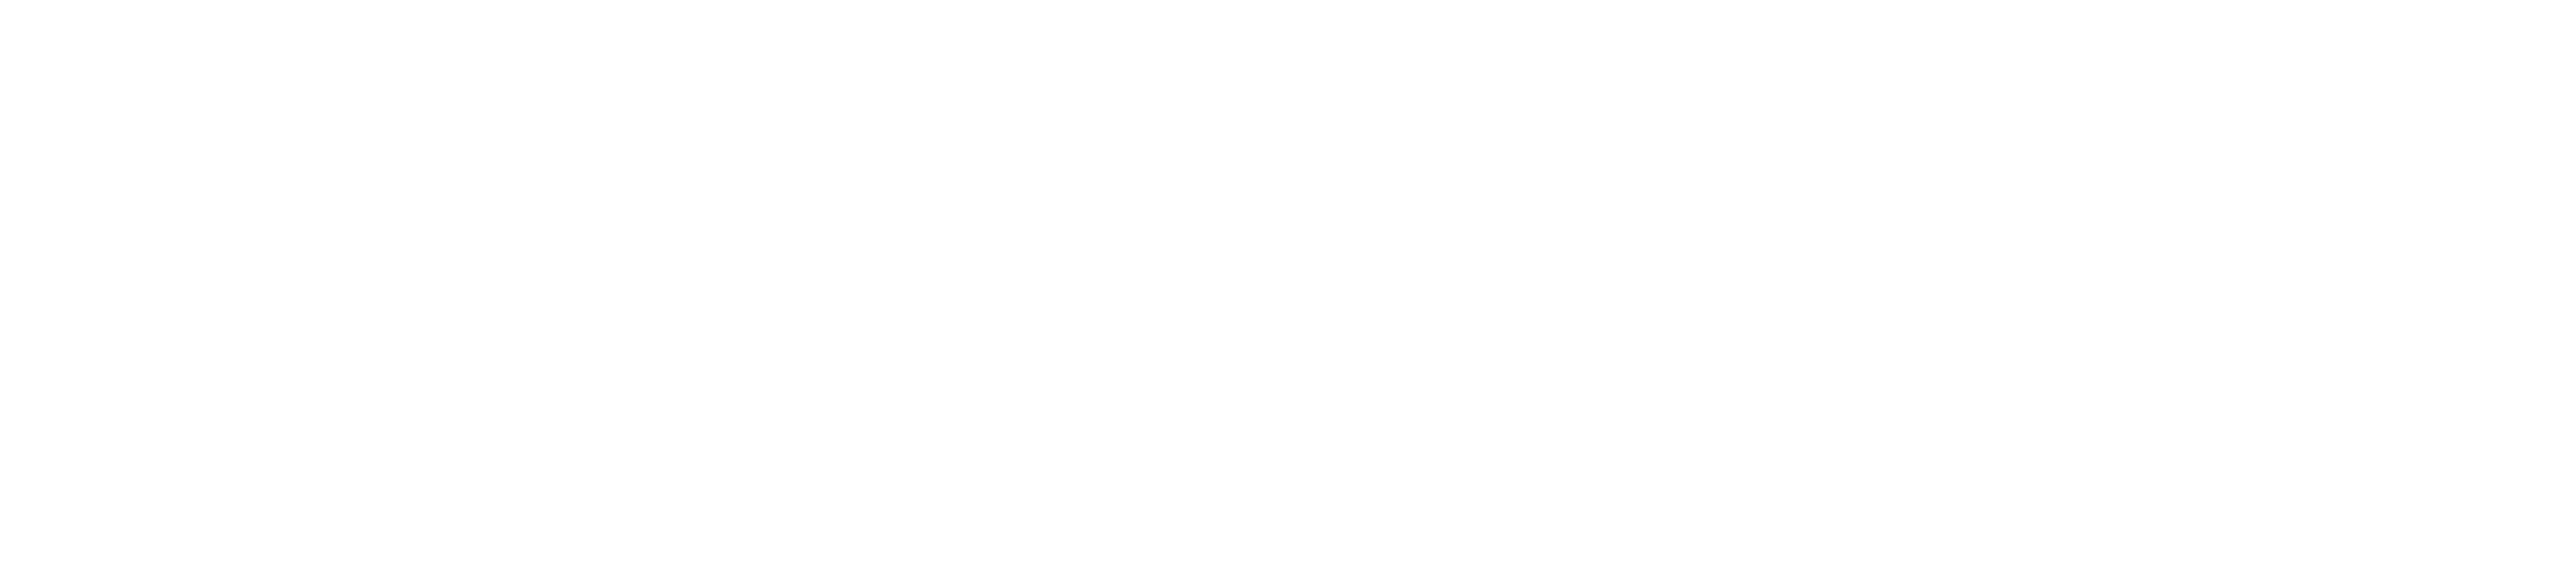 markforged_primary_logo_branco